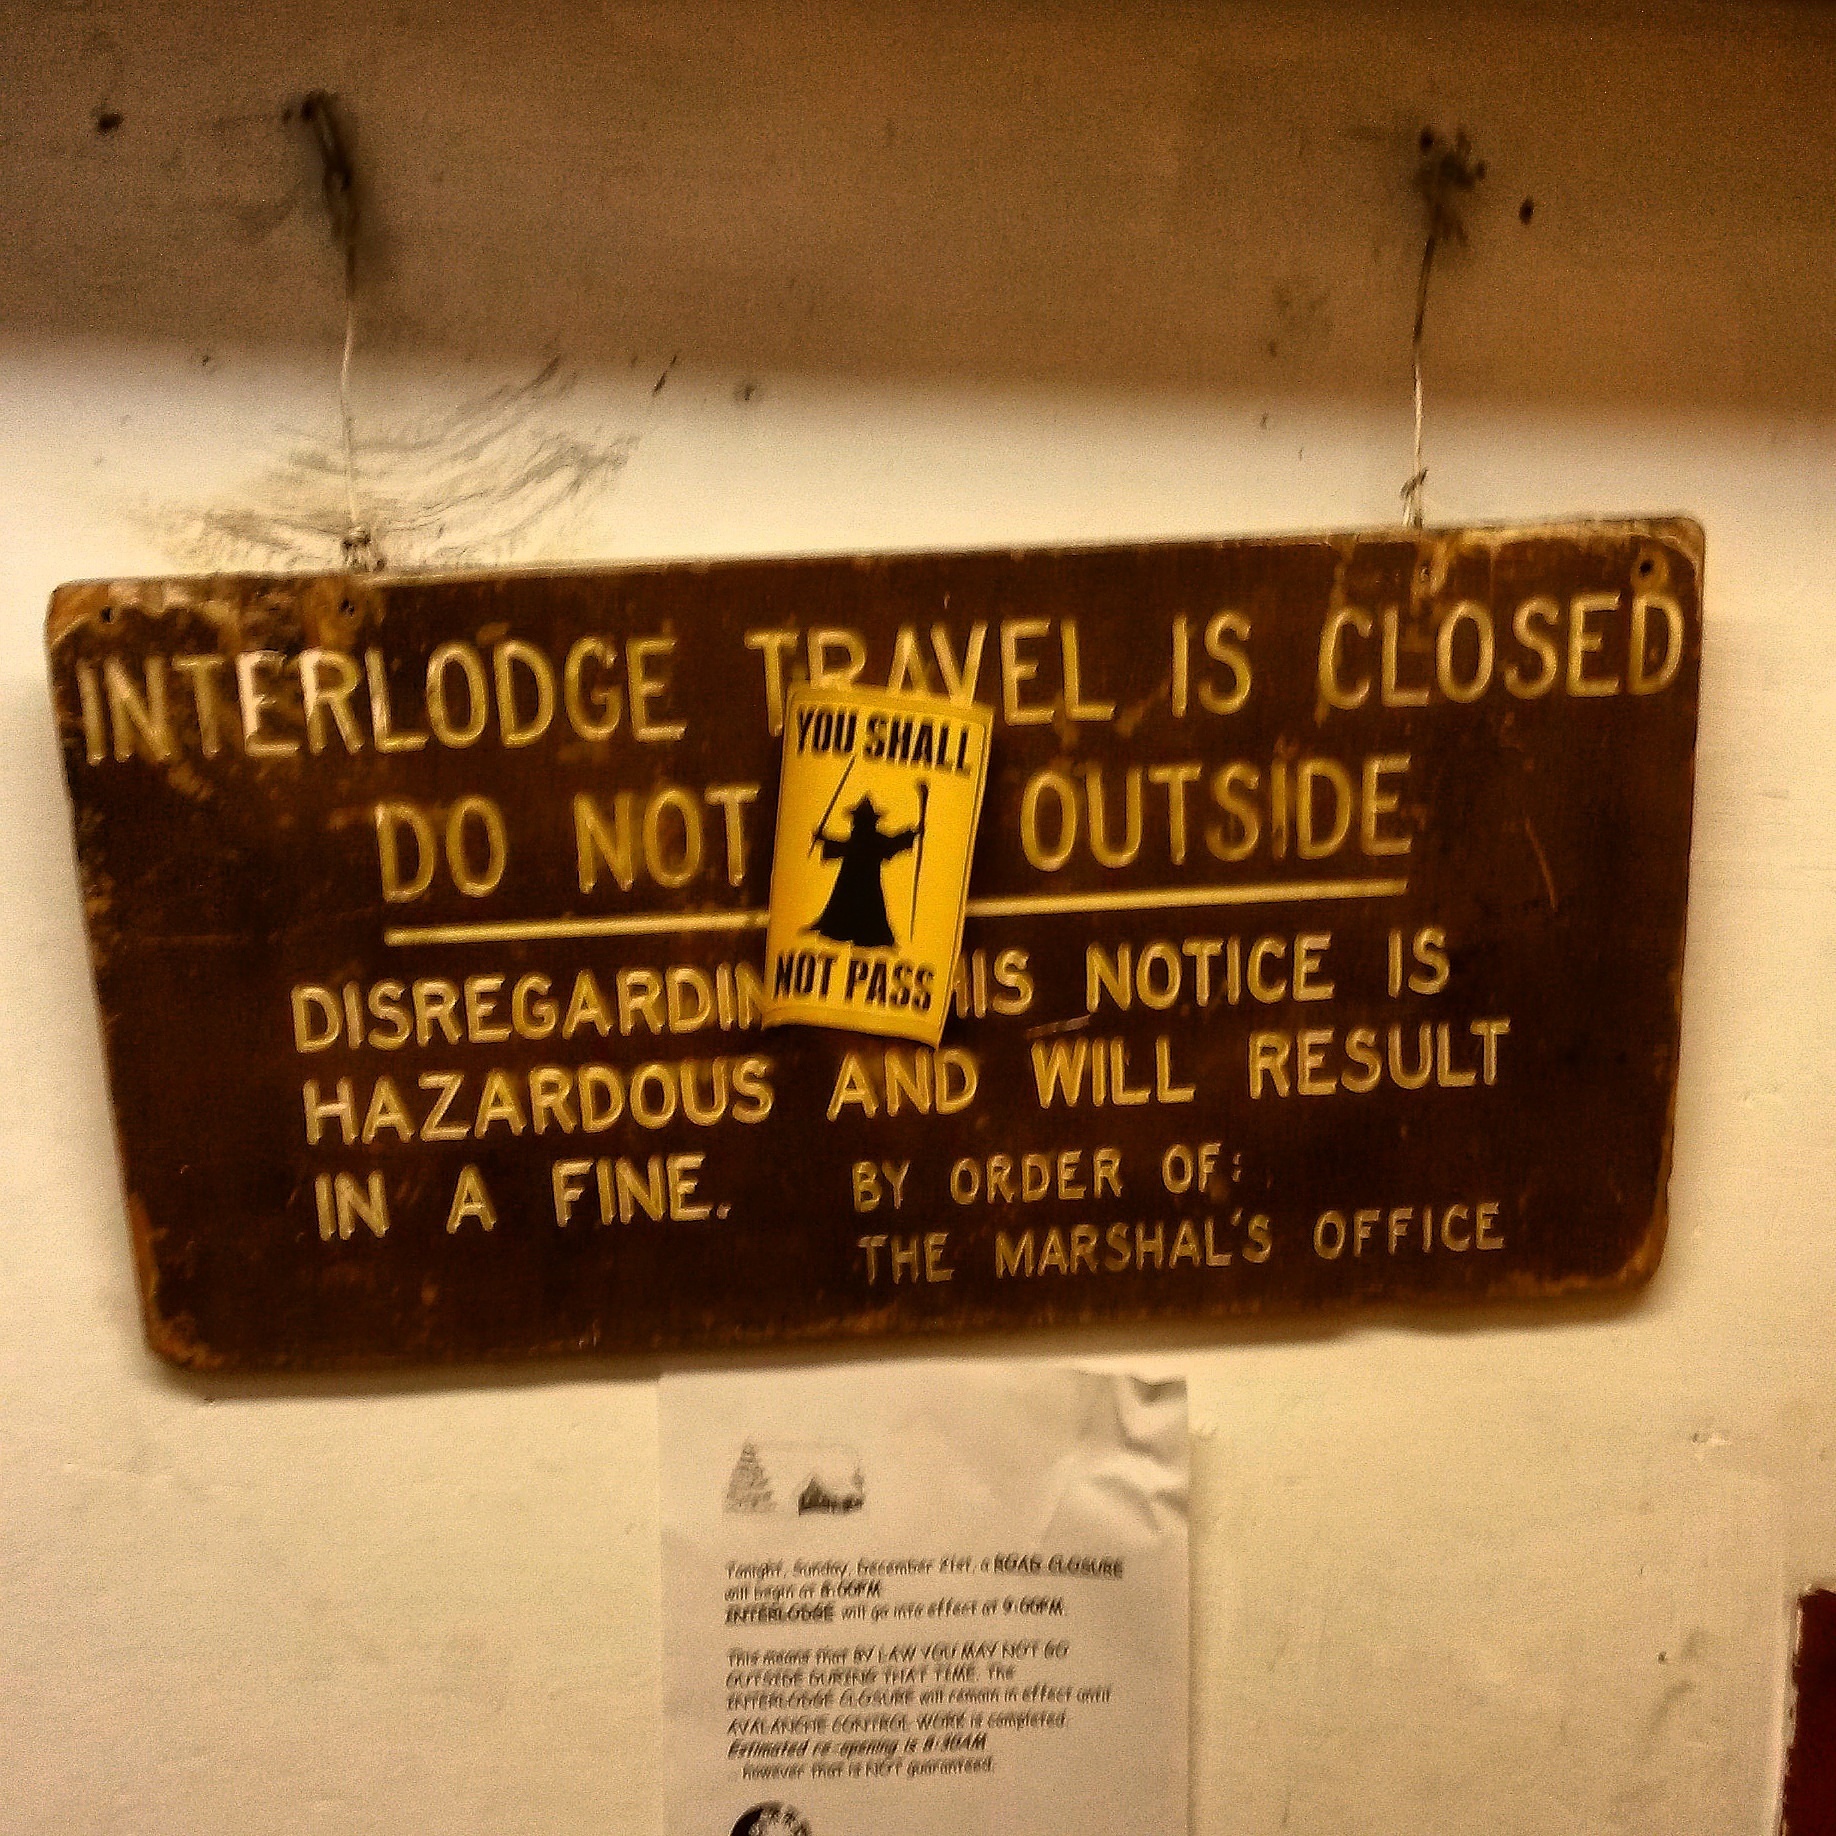 No Interlodge travel permitted